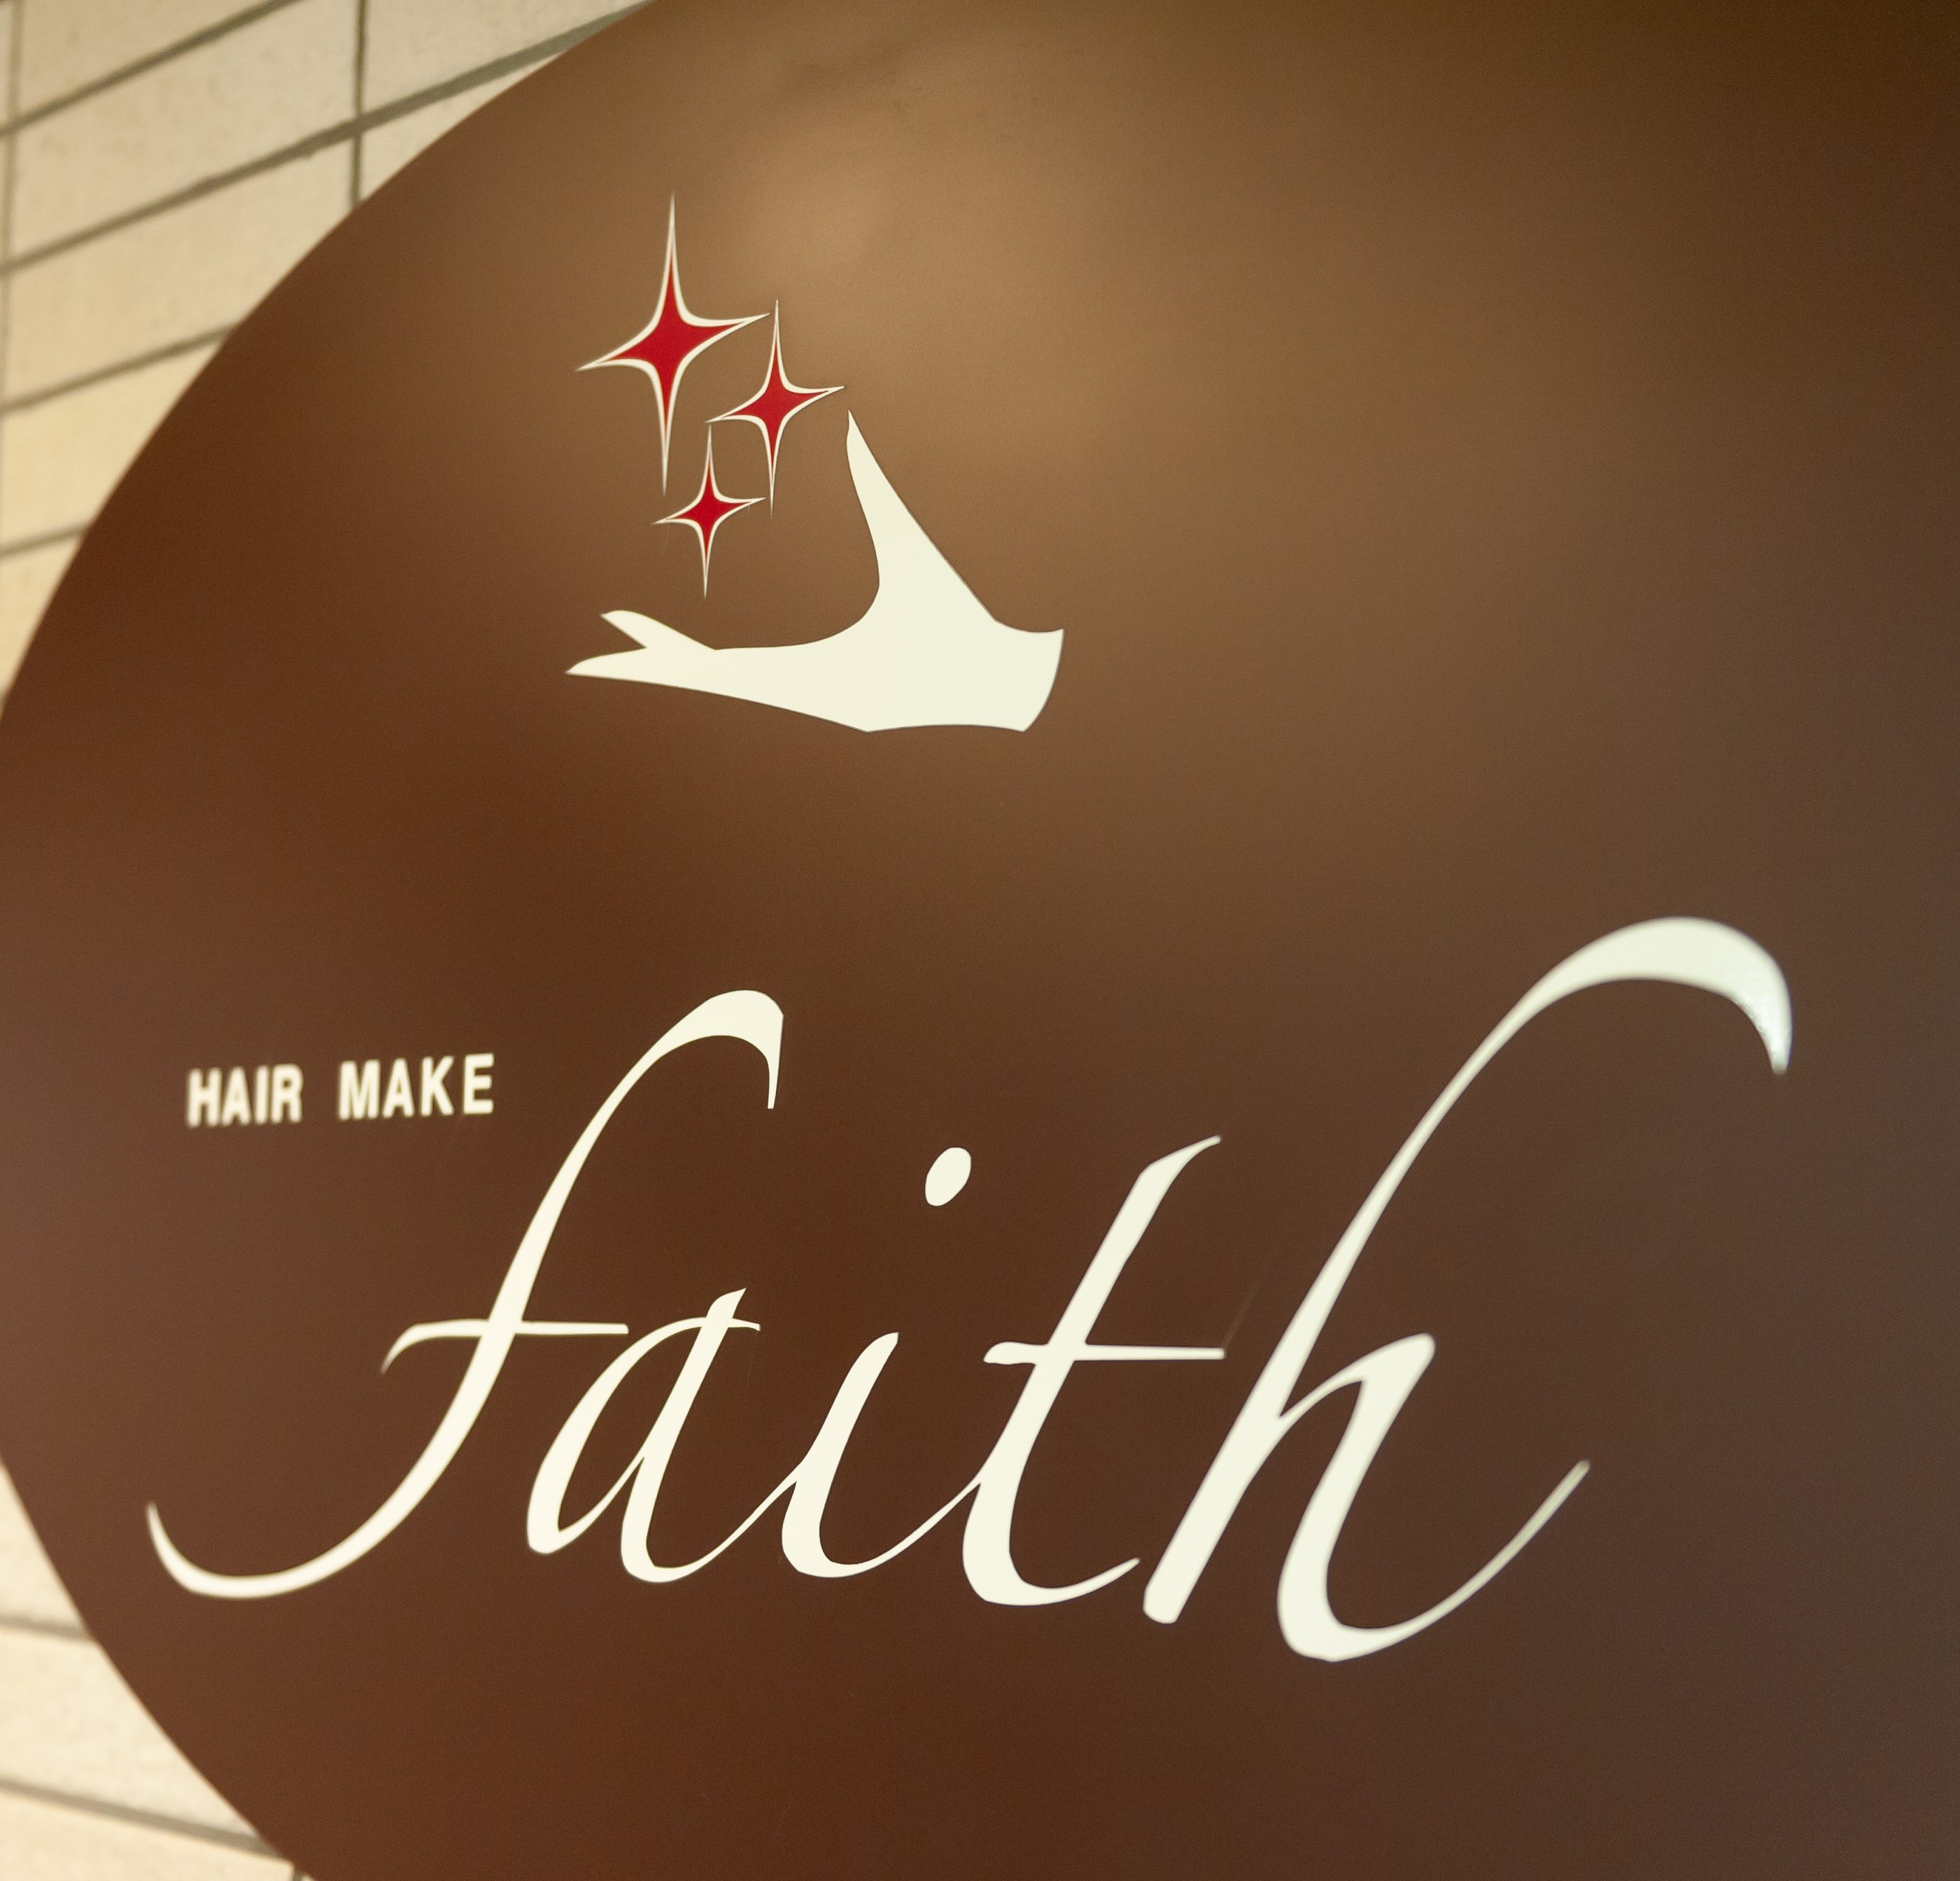 HAIR MAKE faith